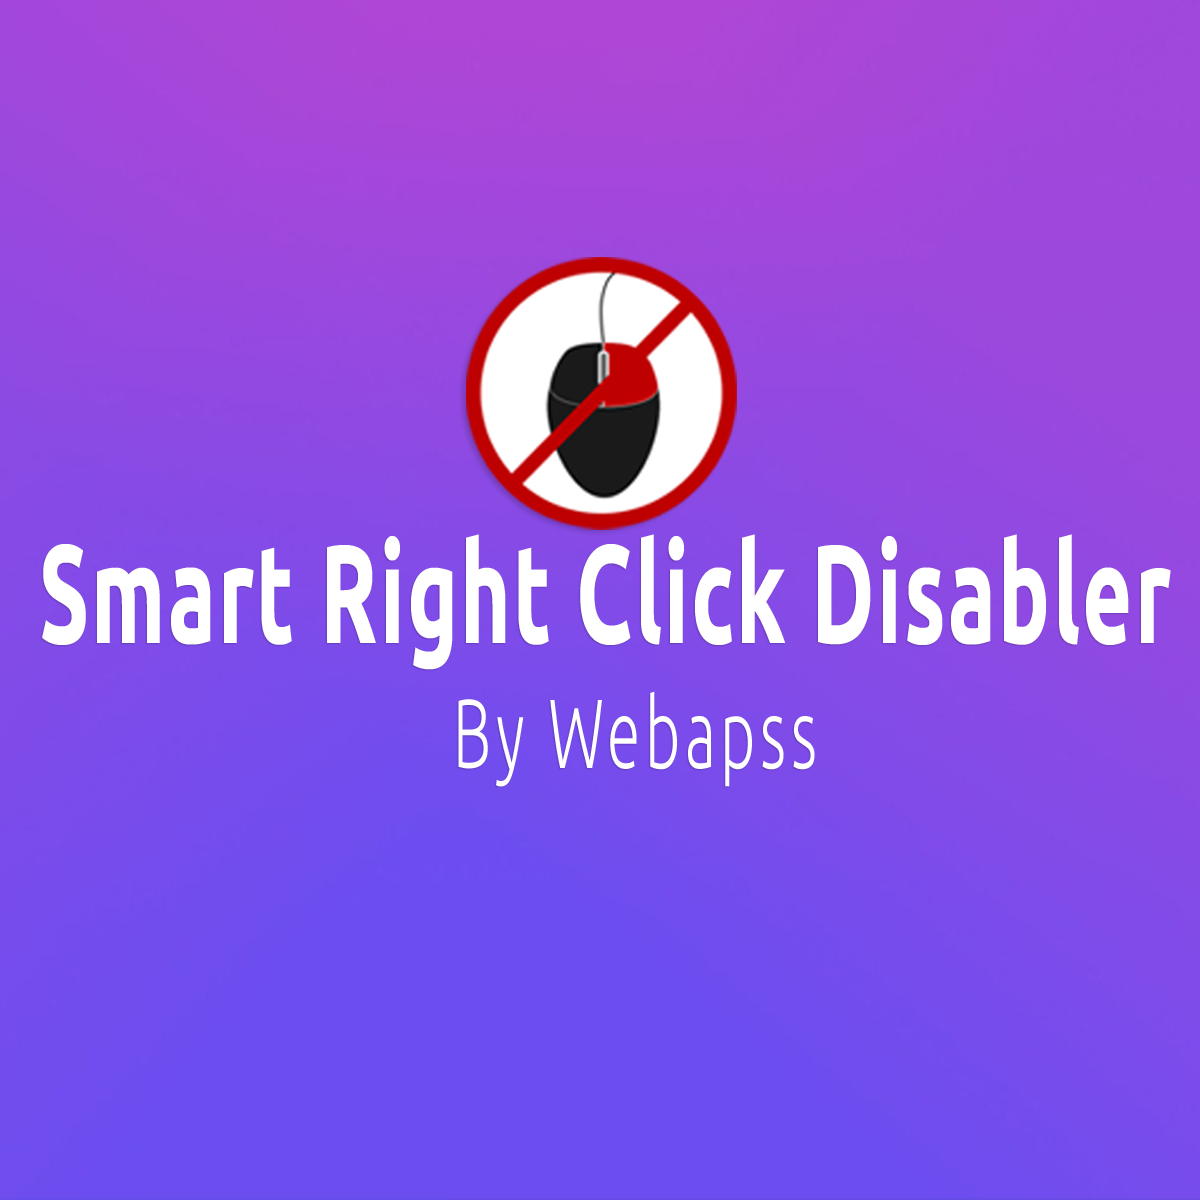 Smart Right Click Disabler